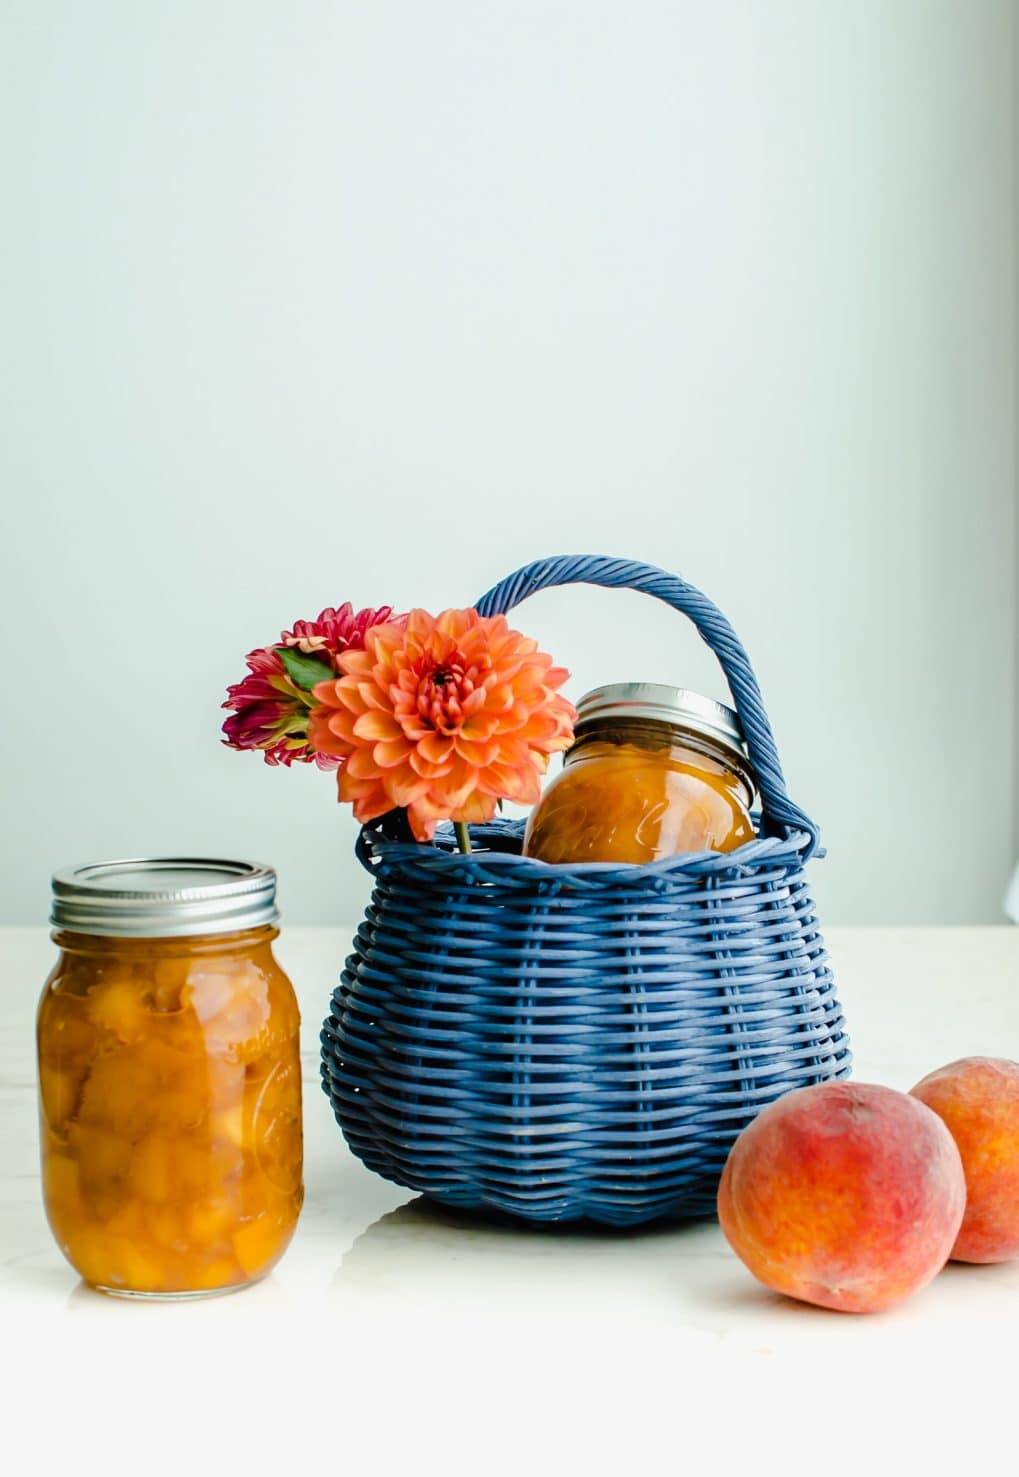 A shot of a blue wicker basket filled with dahlias and a jar of homemade peach jam.